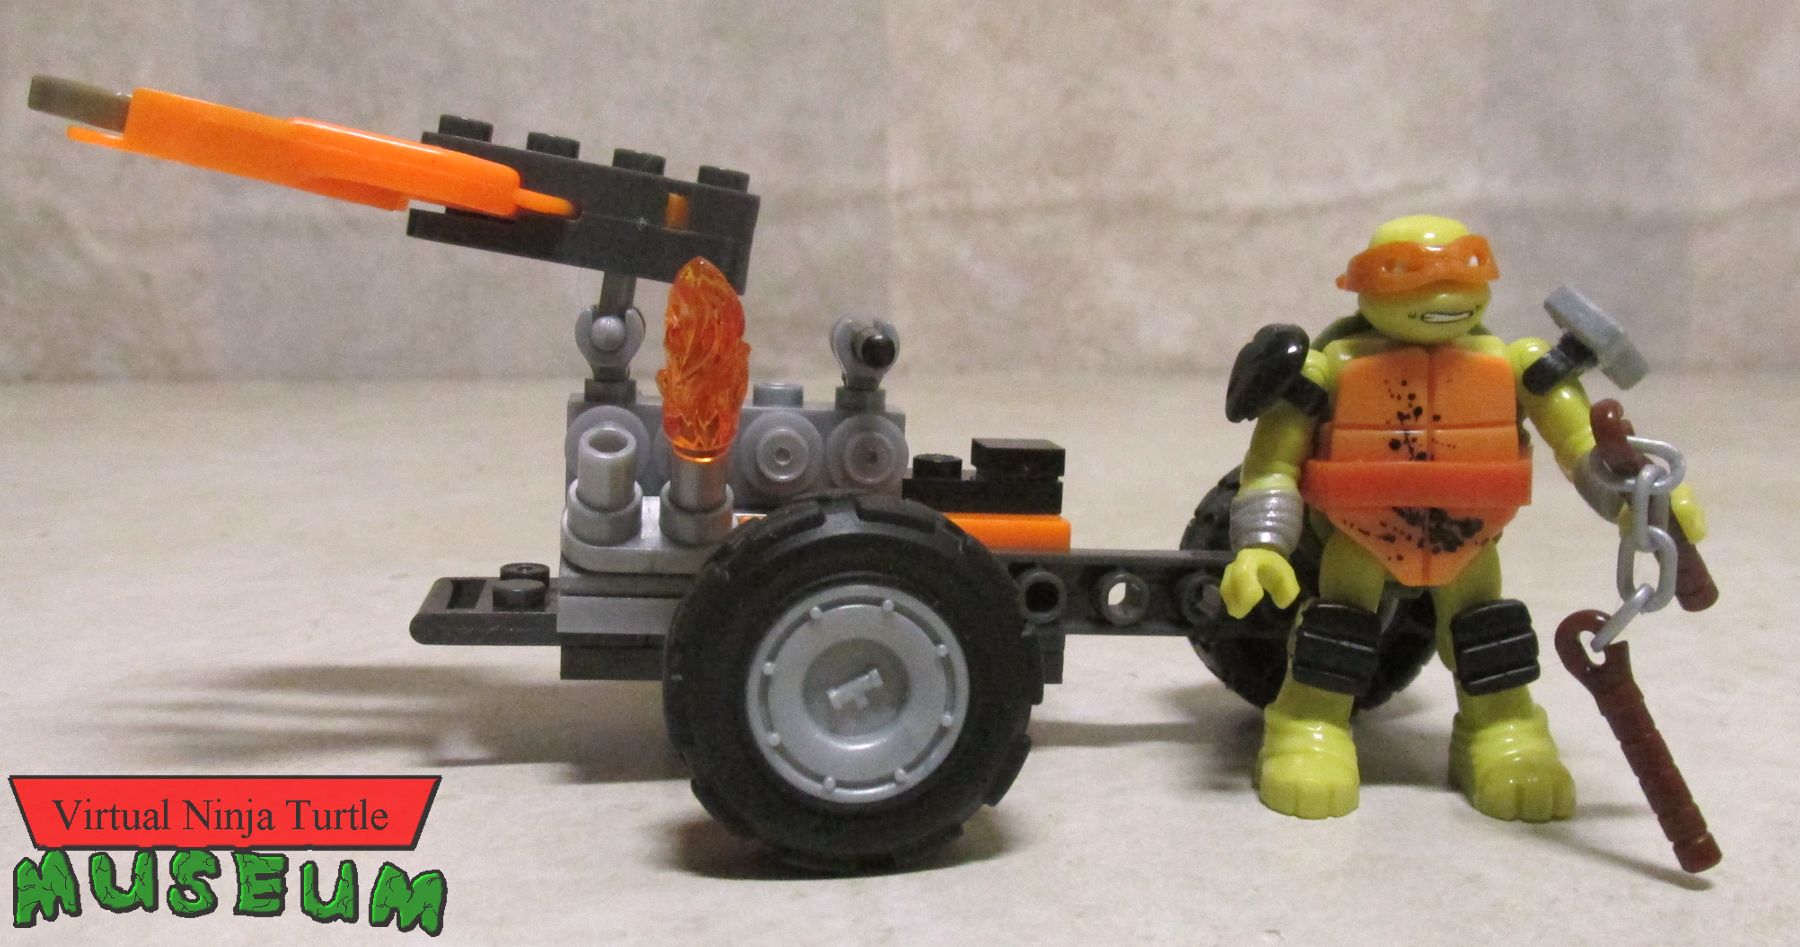 MEGA Construx Teenage Mutant Ninja Turtles Mikey Stealth Tour Trike Fcc54 64 Pcs for sale online 